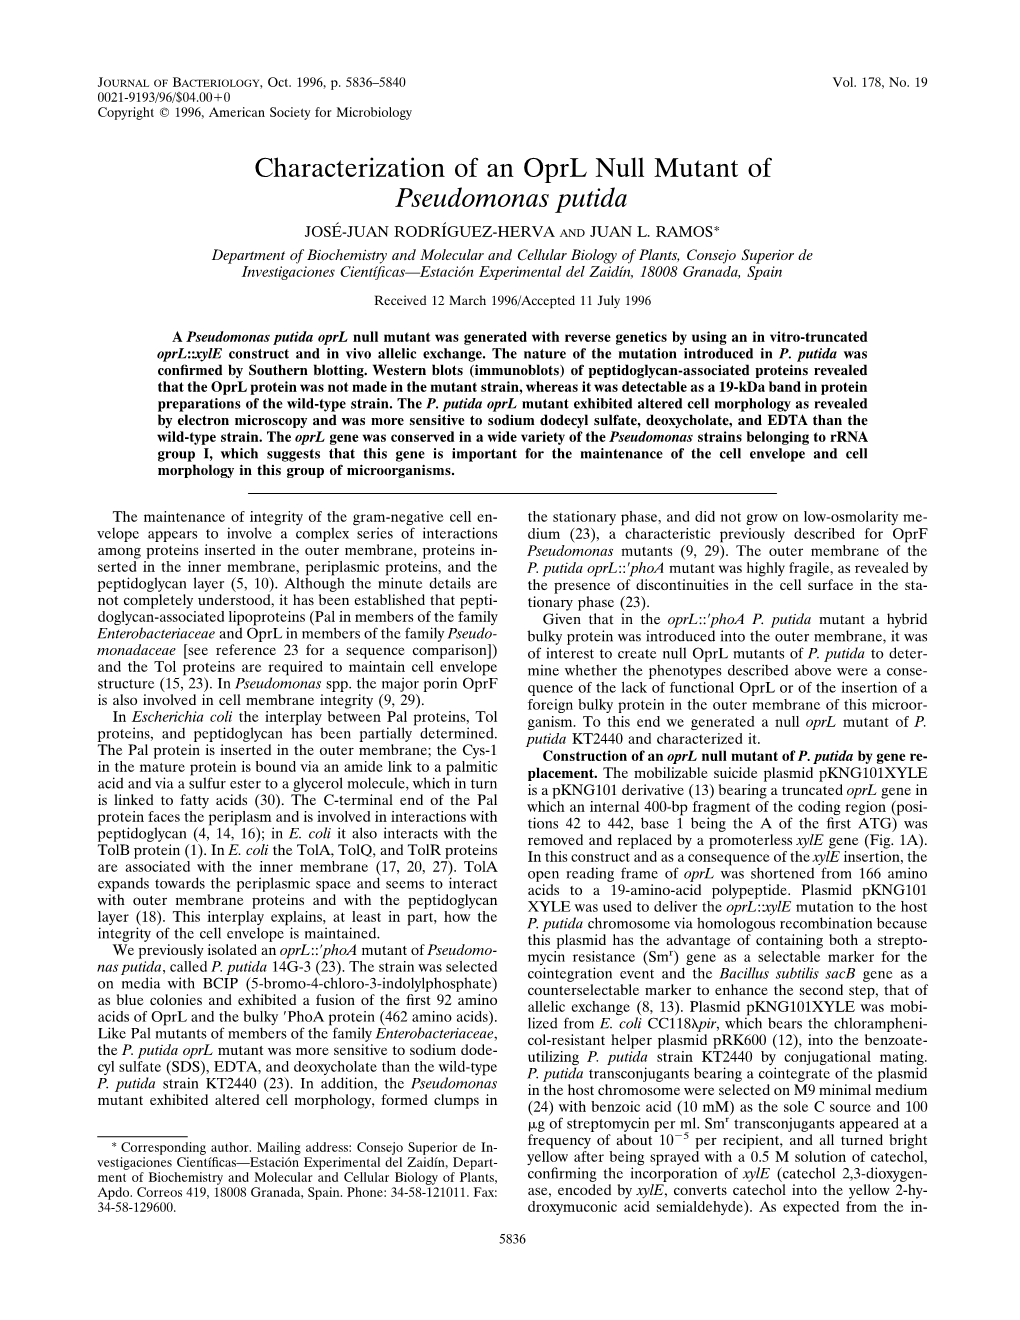 Characterization of an Oprl Null Mutant of Pseudomonas Putida